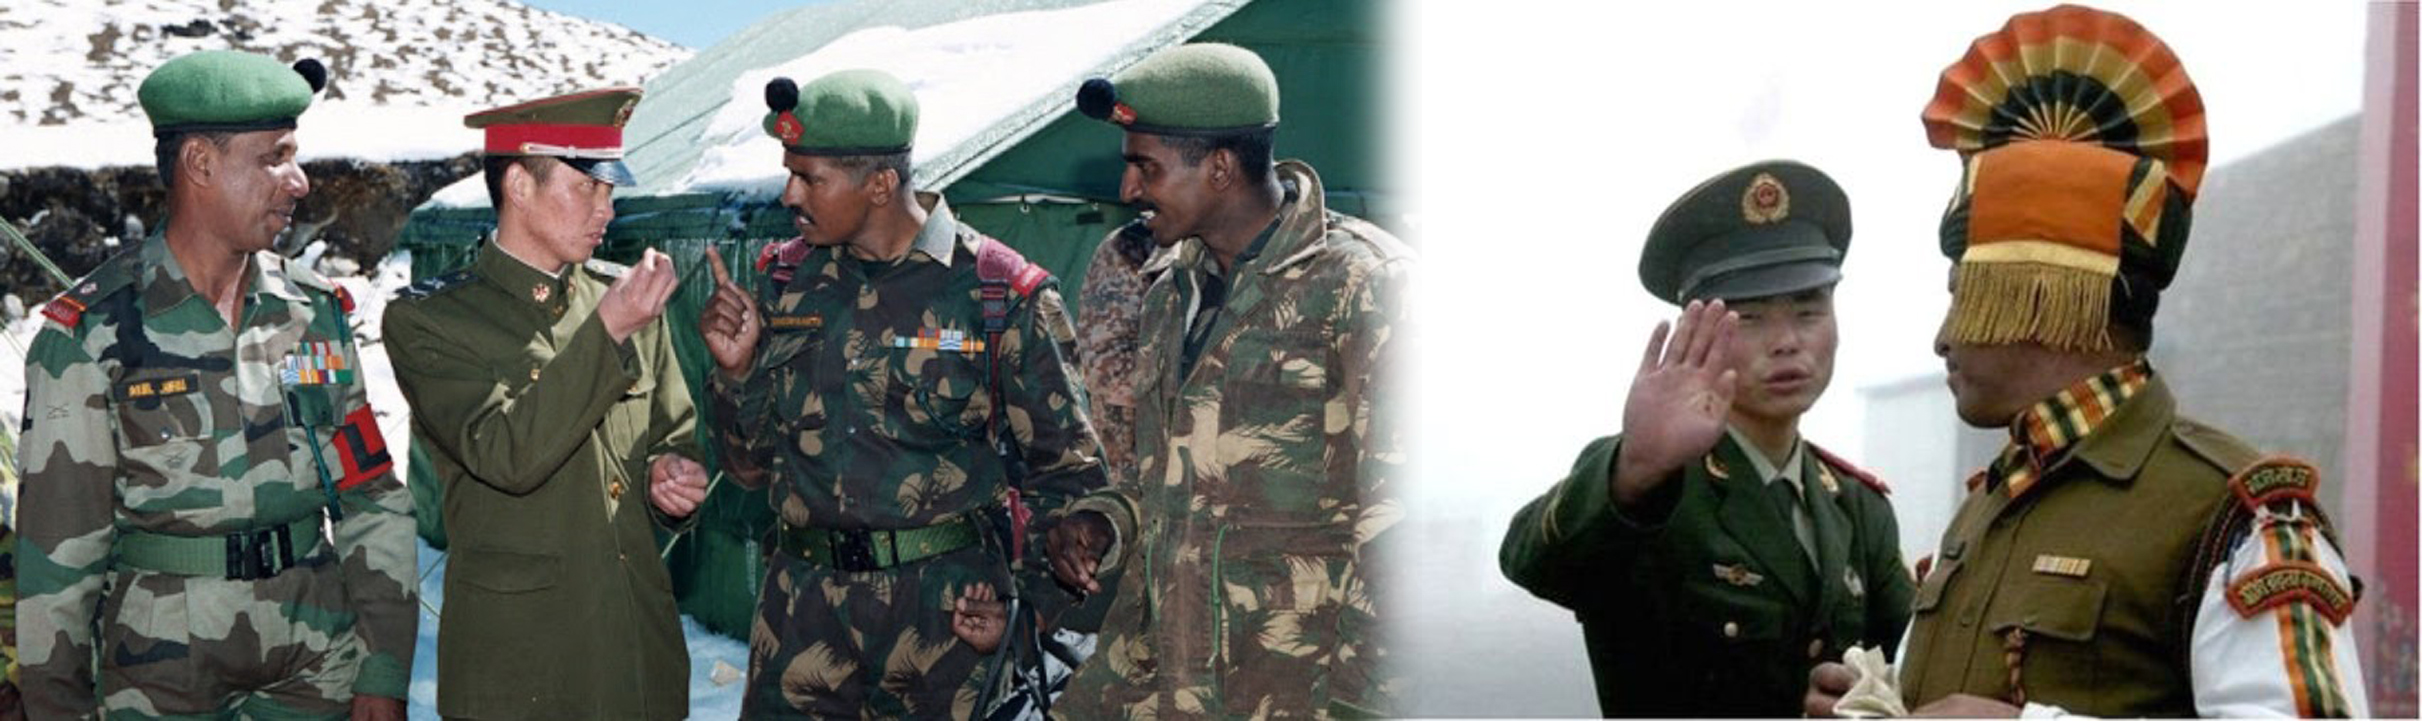 लद्दाखमा चिनियाँ र भारतीय सेनाबीच झडप, दर्जनौं सेना घाइते